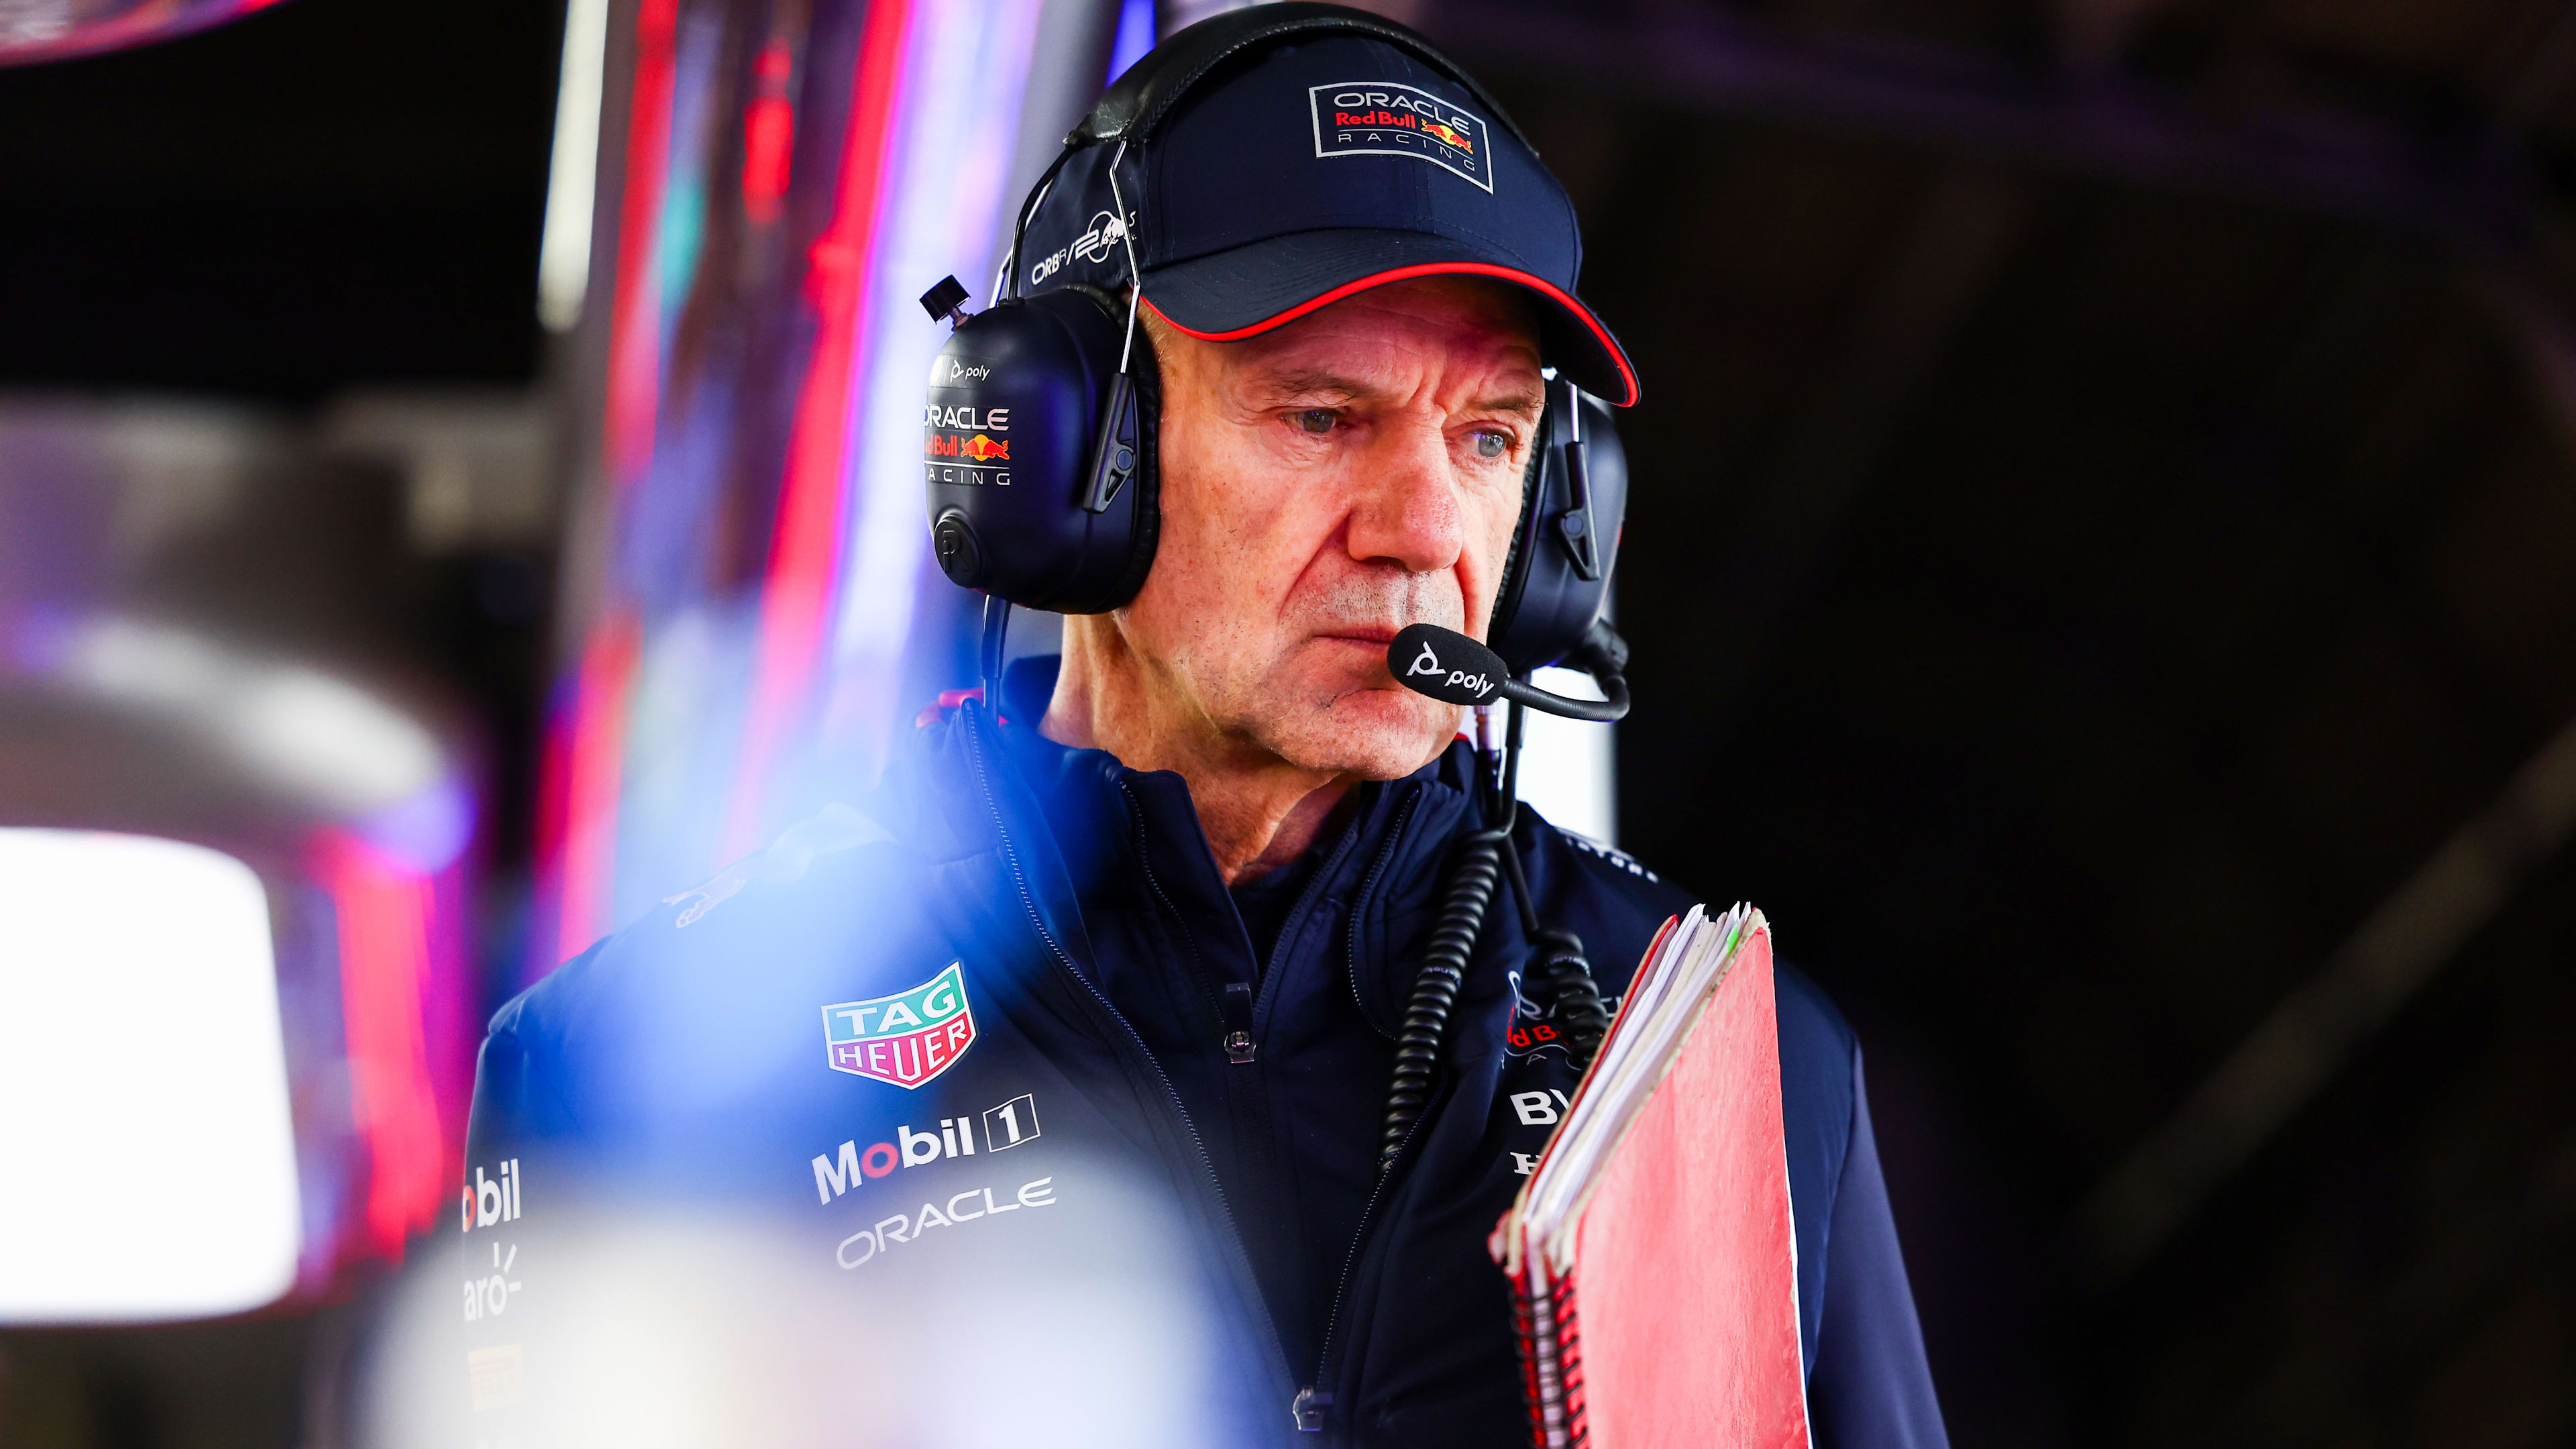 Red Bull confirm legendary F1 designer Adrian Newe